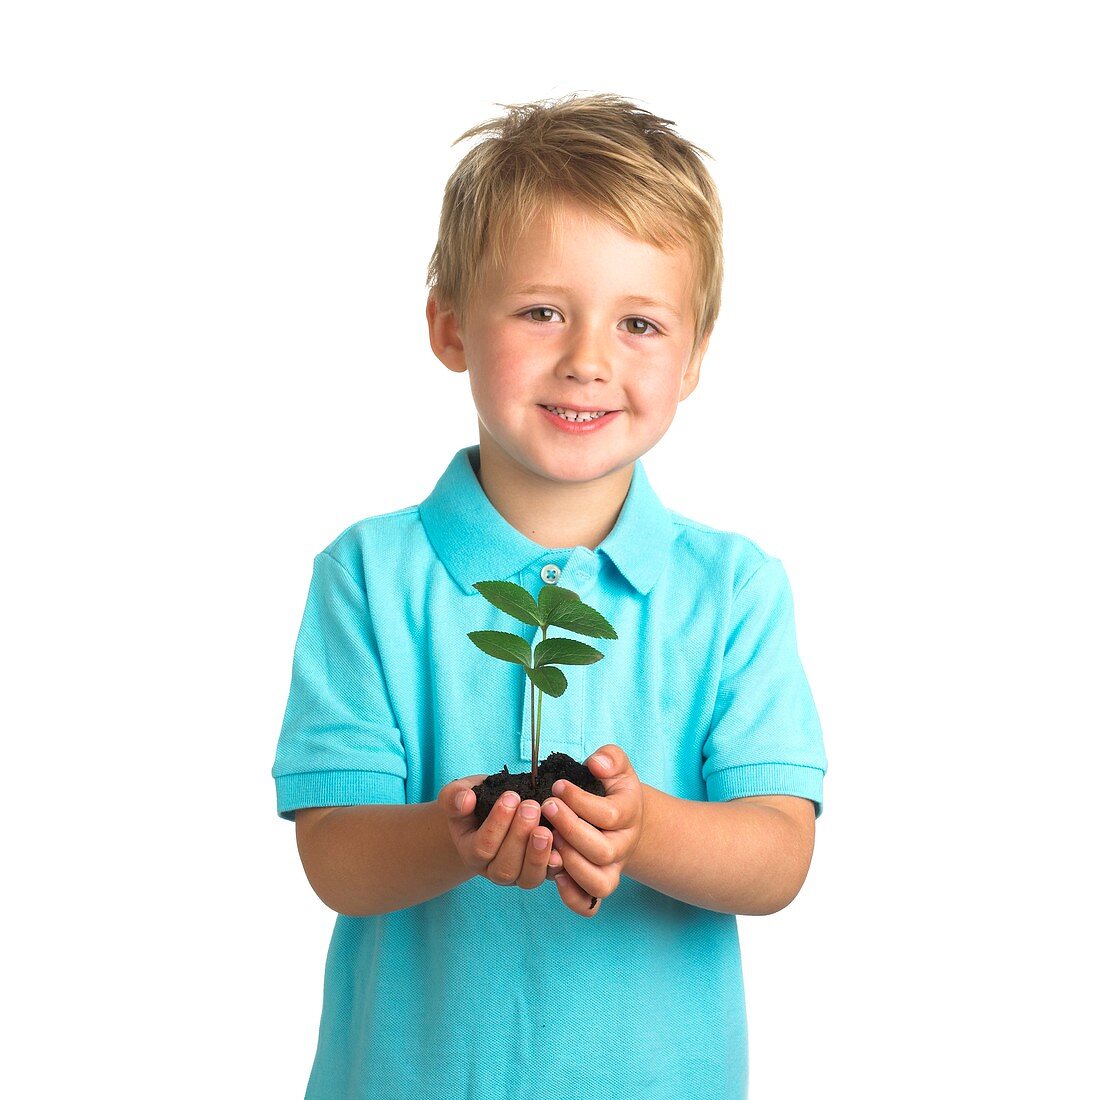 Boy holding seedling